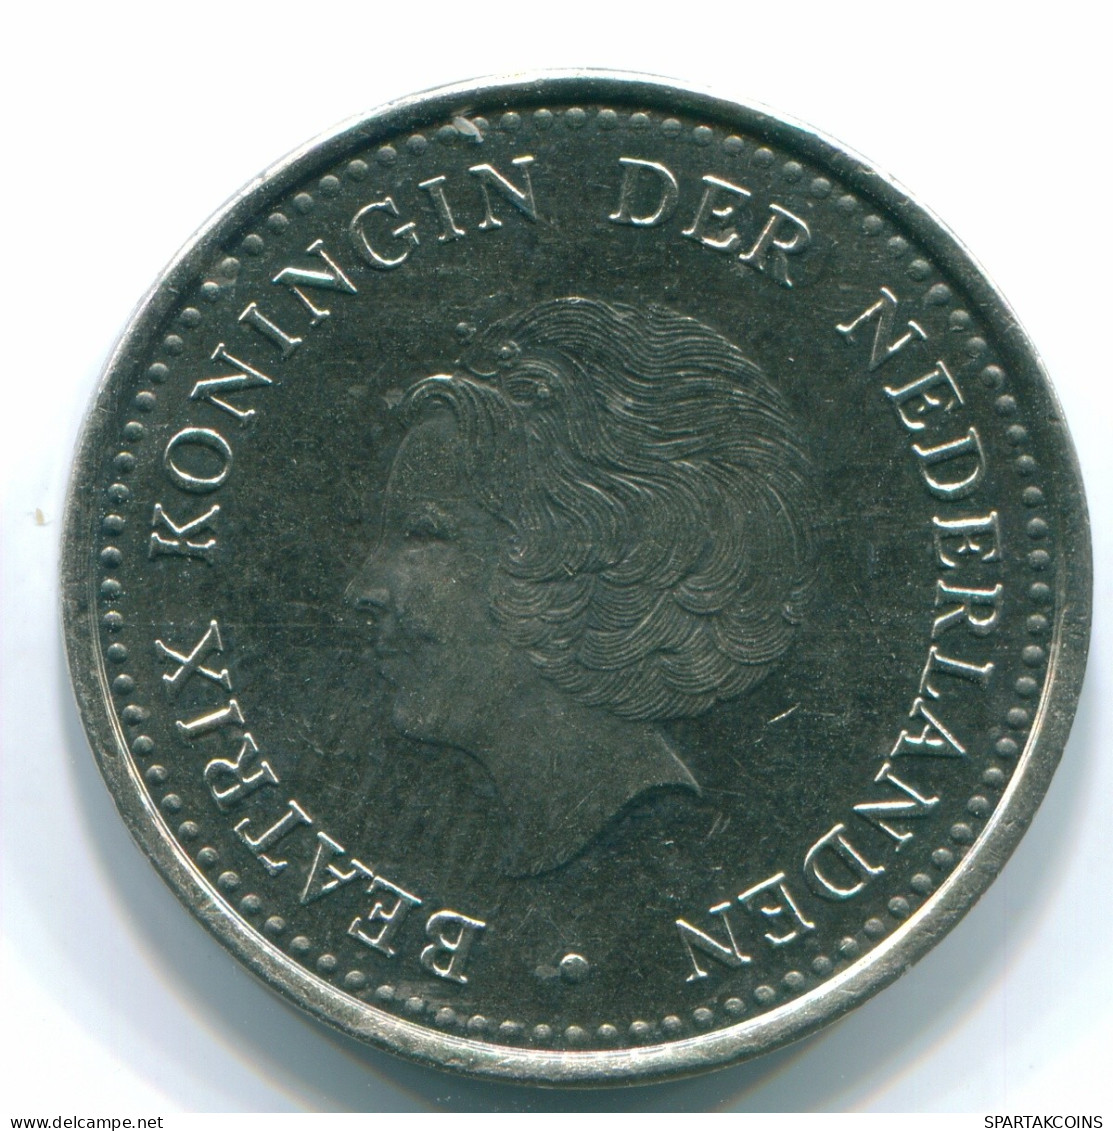 1 GULDEN 1980 NETHERLANDS ANTILLES Nickel Colonial Coin #S12046.U.A - Netherlands Antilles